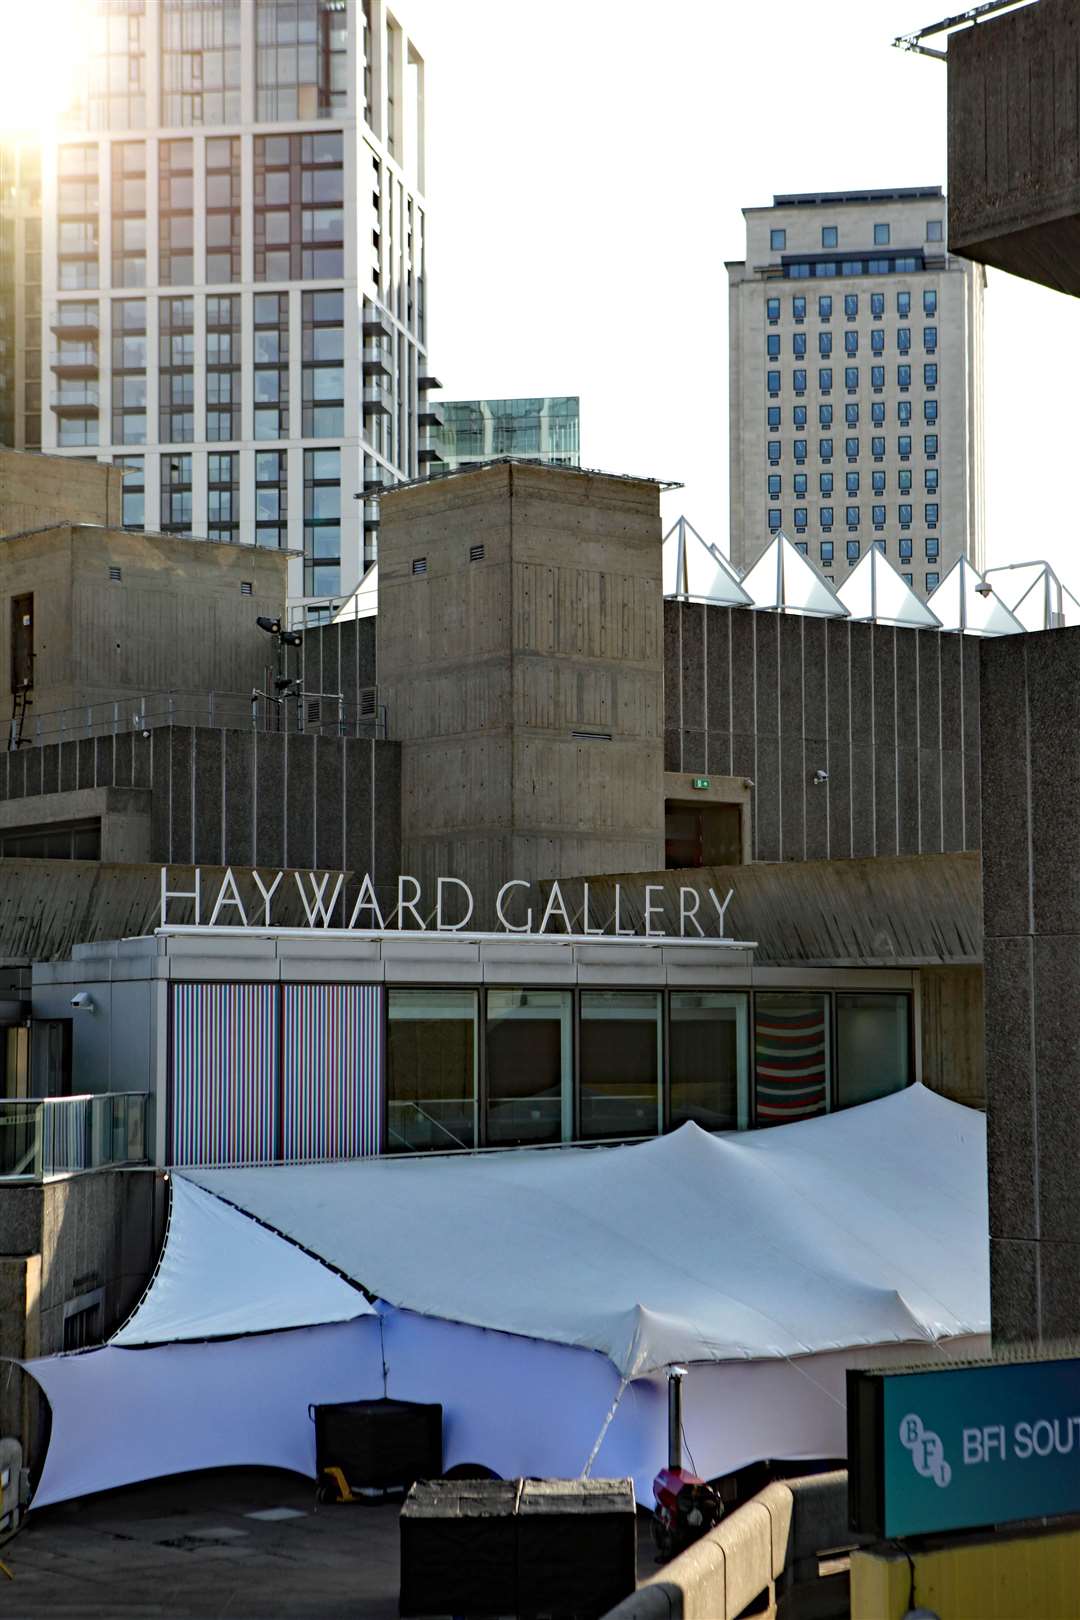 The Hayward Gallery from Waterloo Bridge (Luciana Guerra/PA)